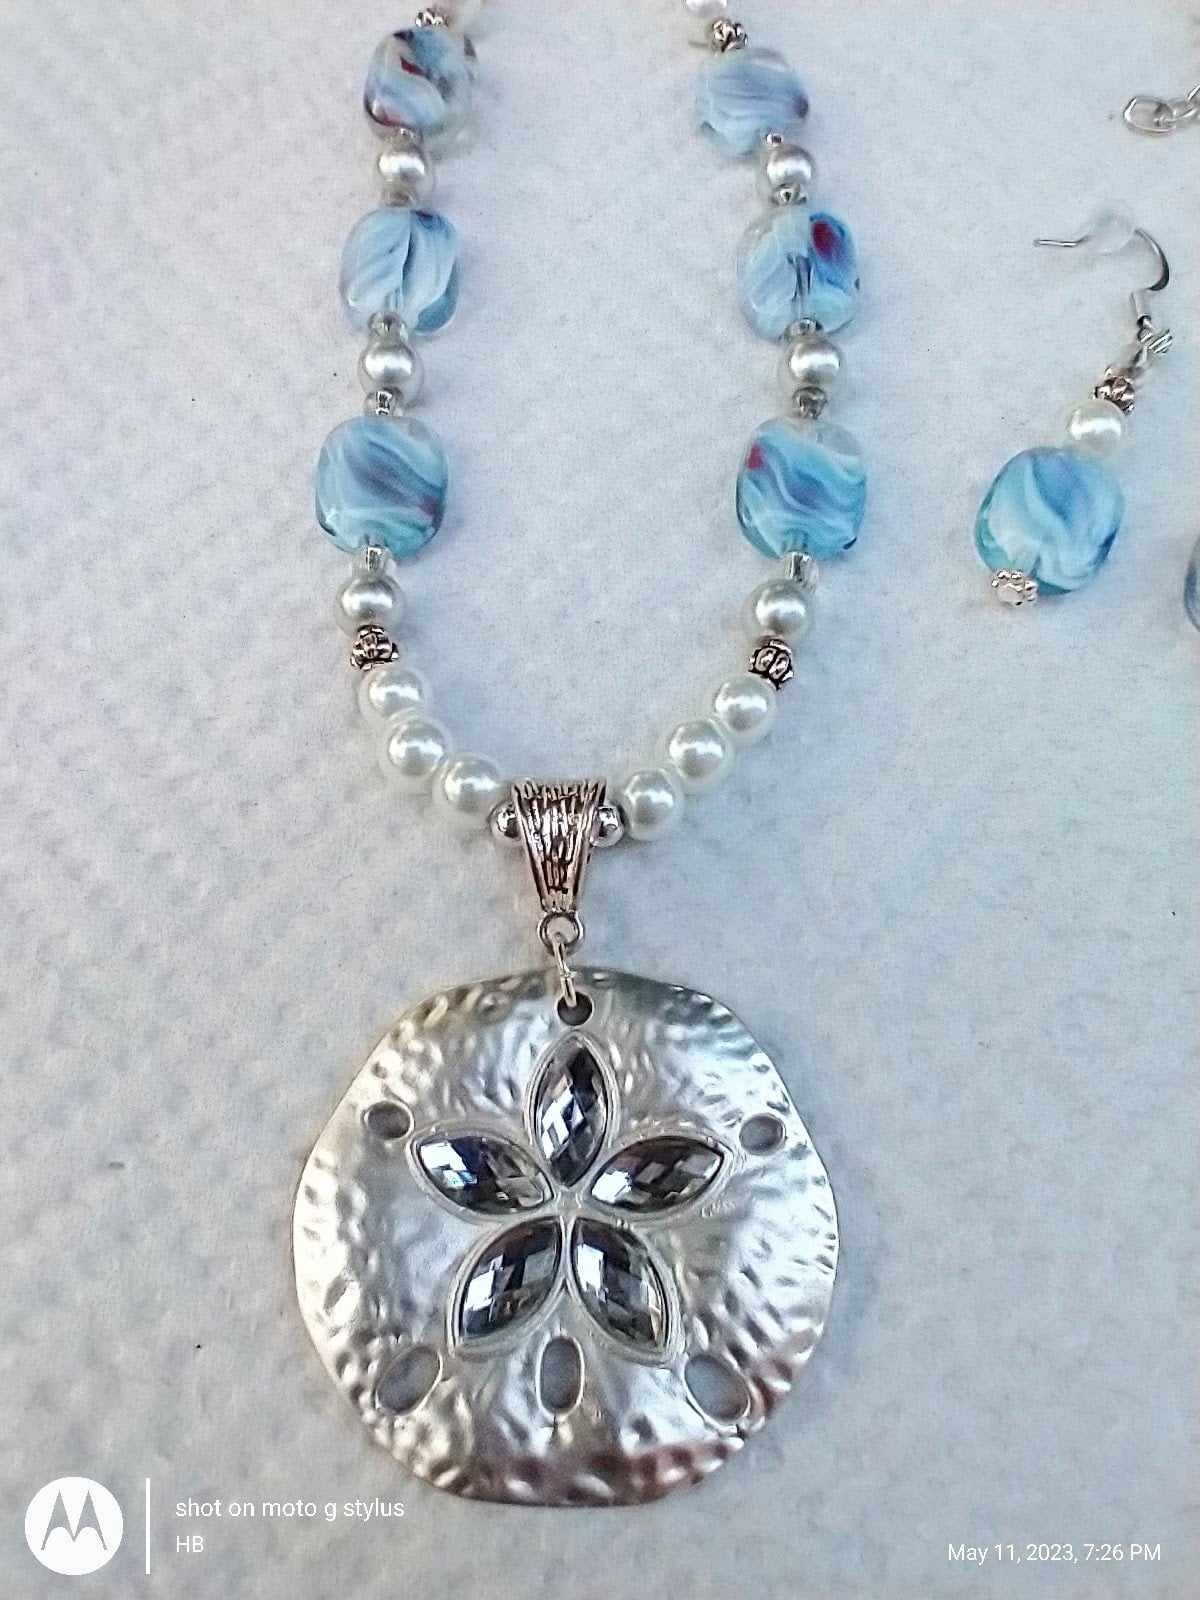 Soleil Blue: Beachcomber necklace | Sand dollar necklace, Jewelry lookbook,  Pearl jewelry necklace